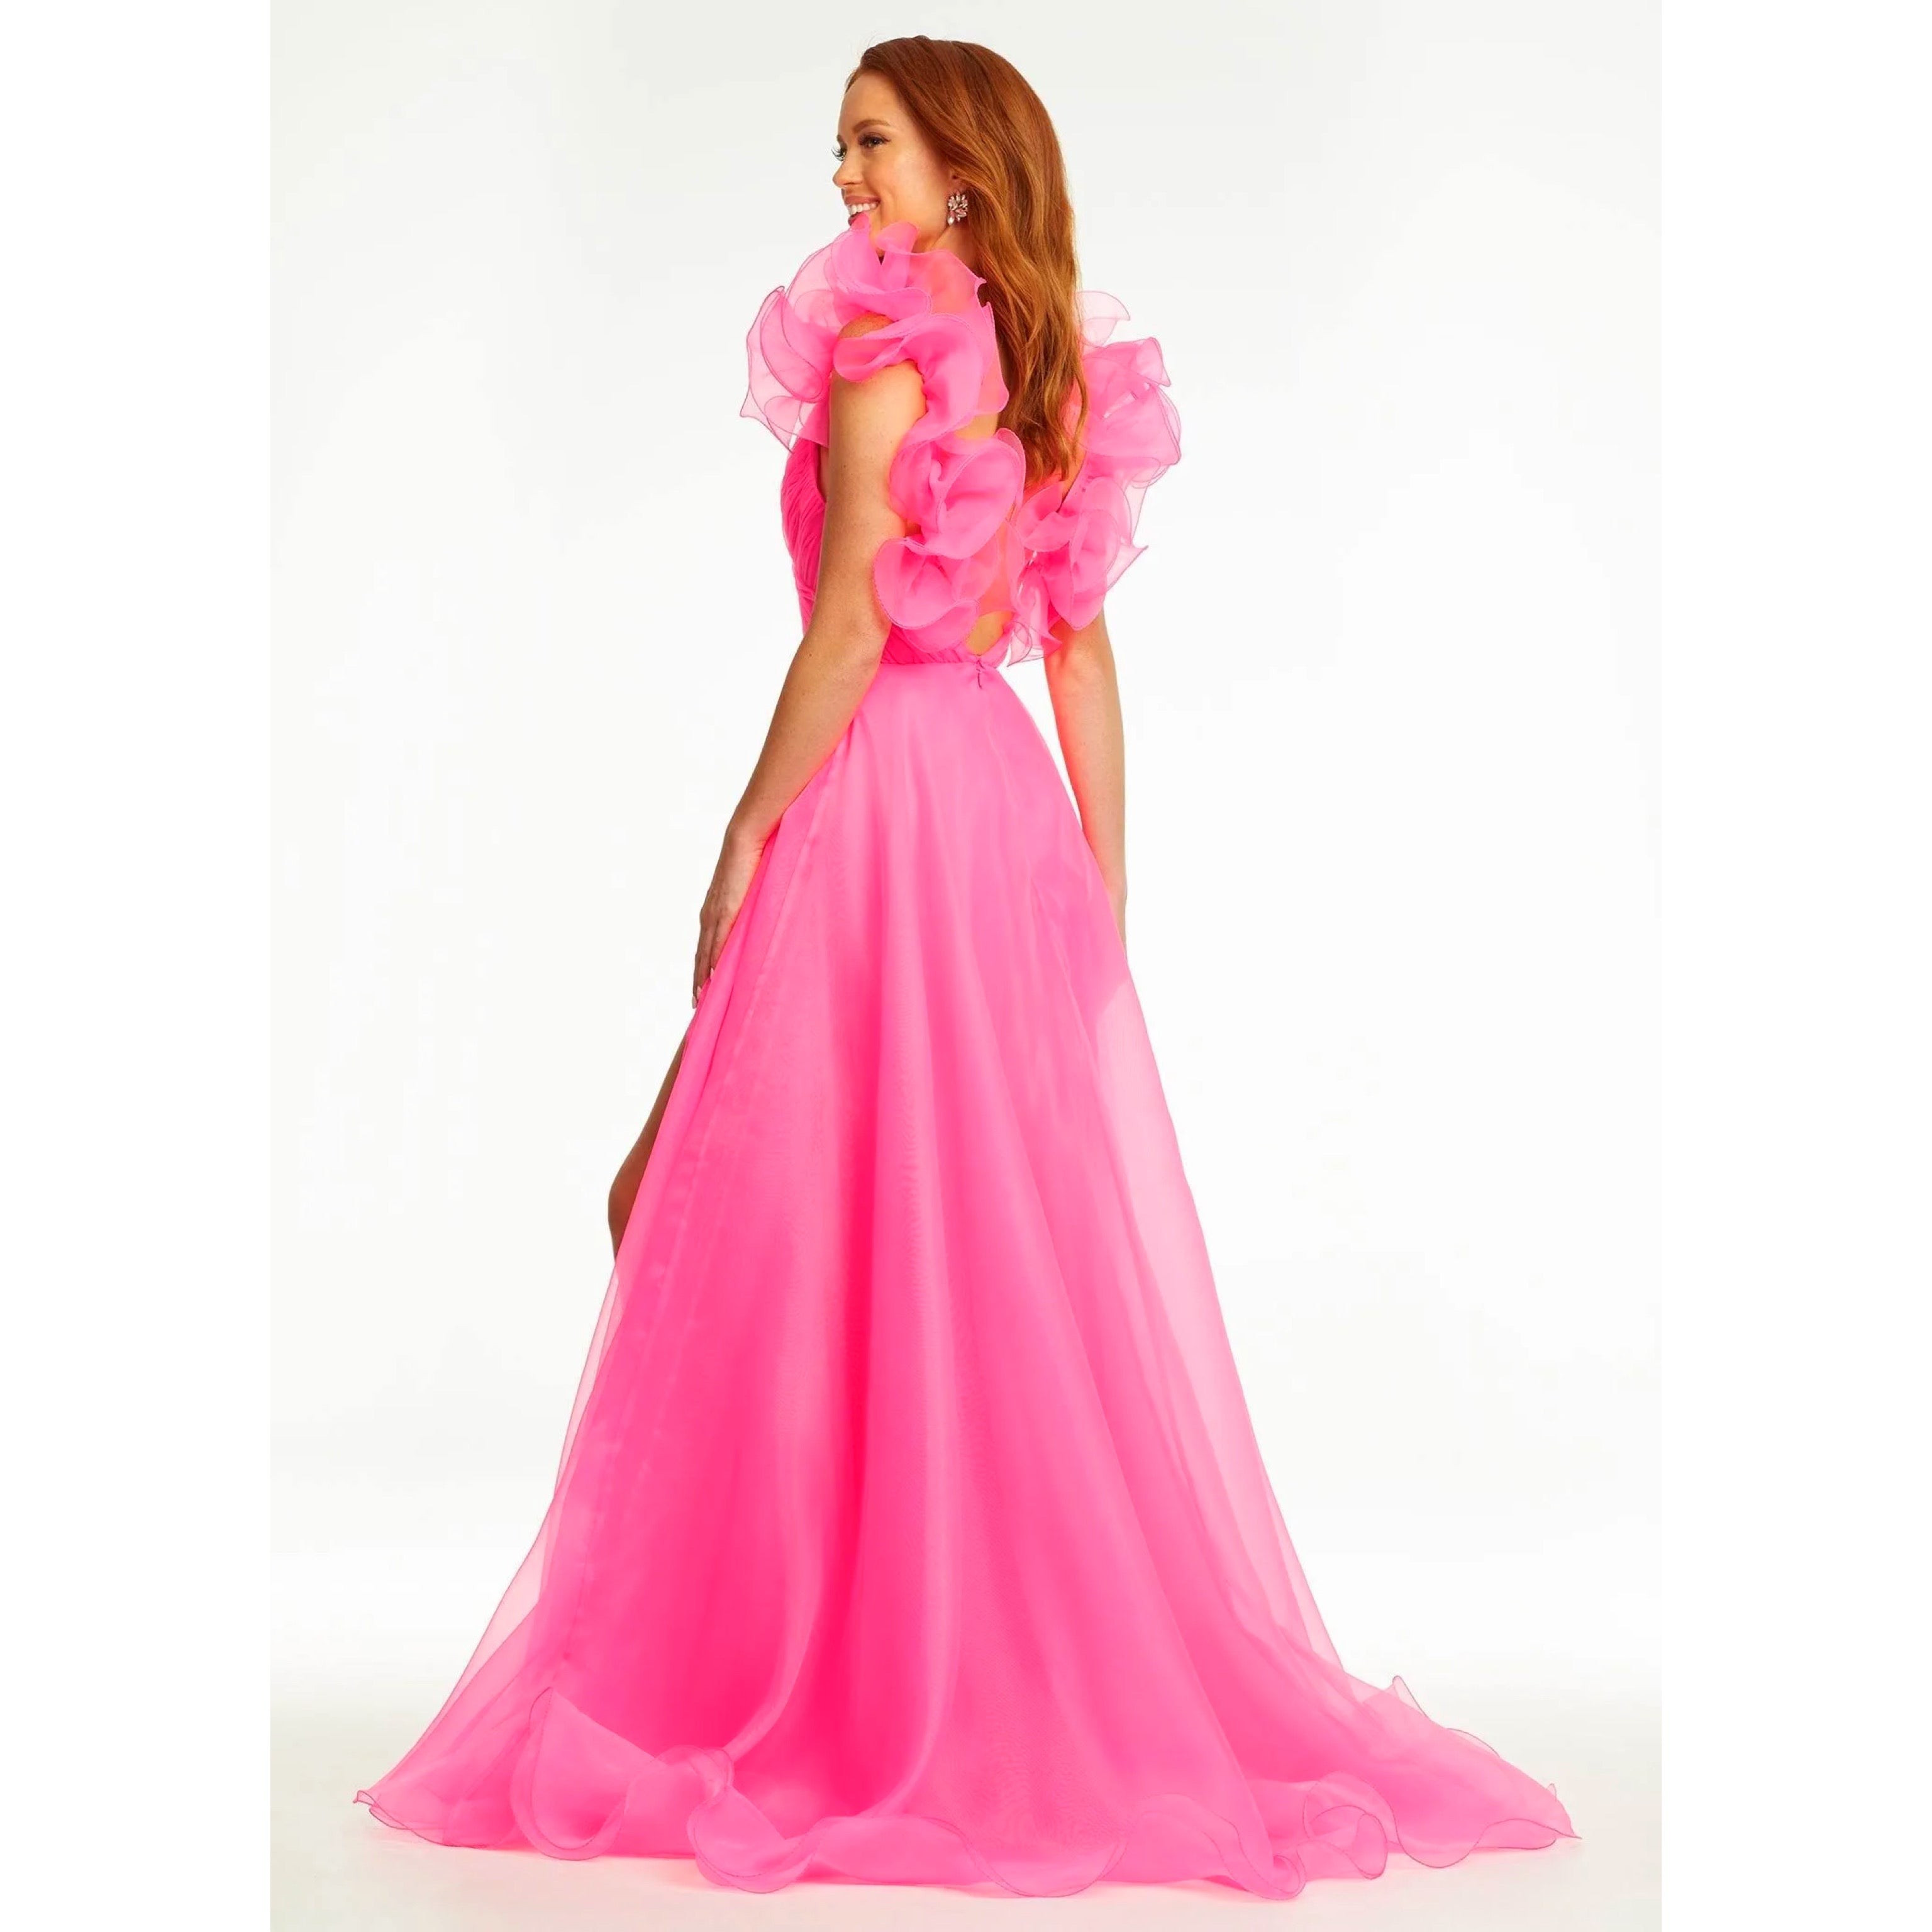 Ashley Lauren hot pink dress, size 4